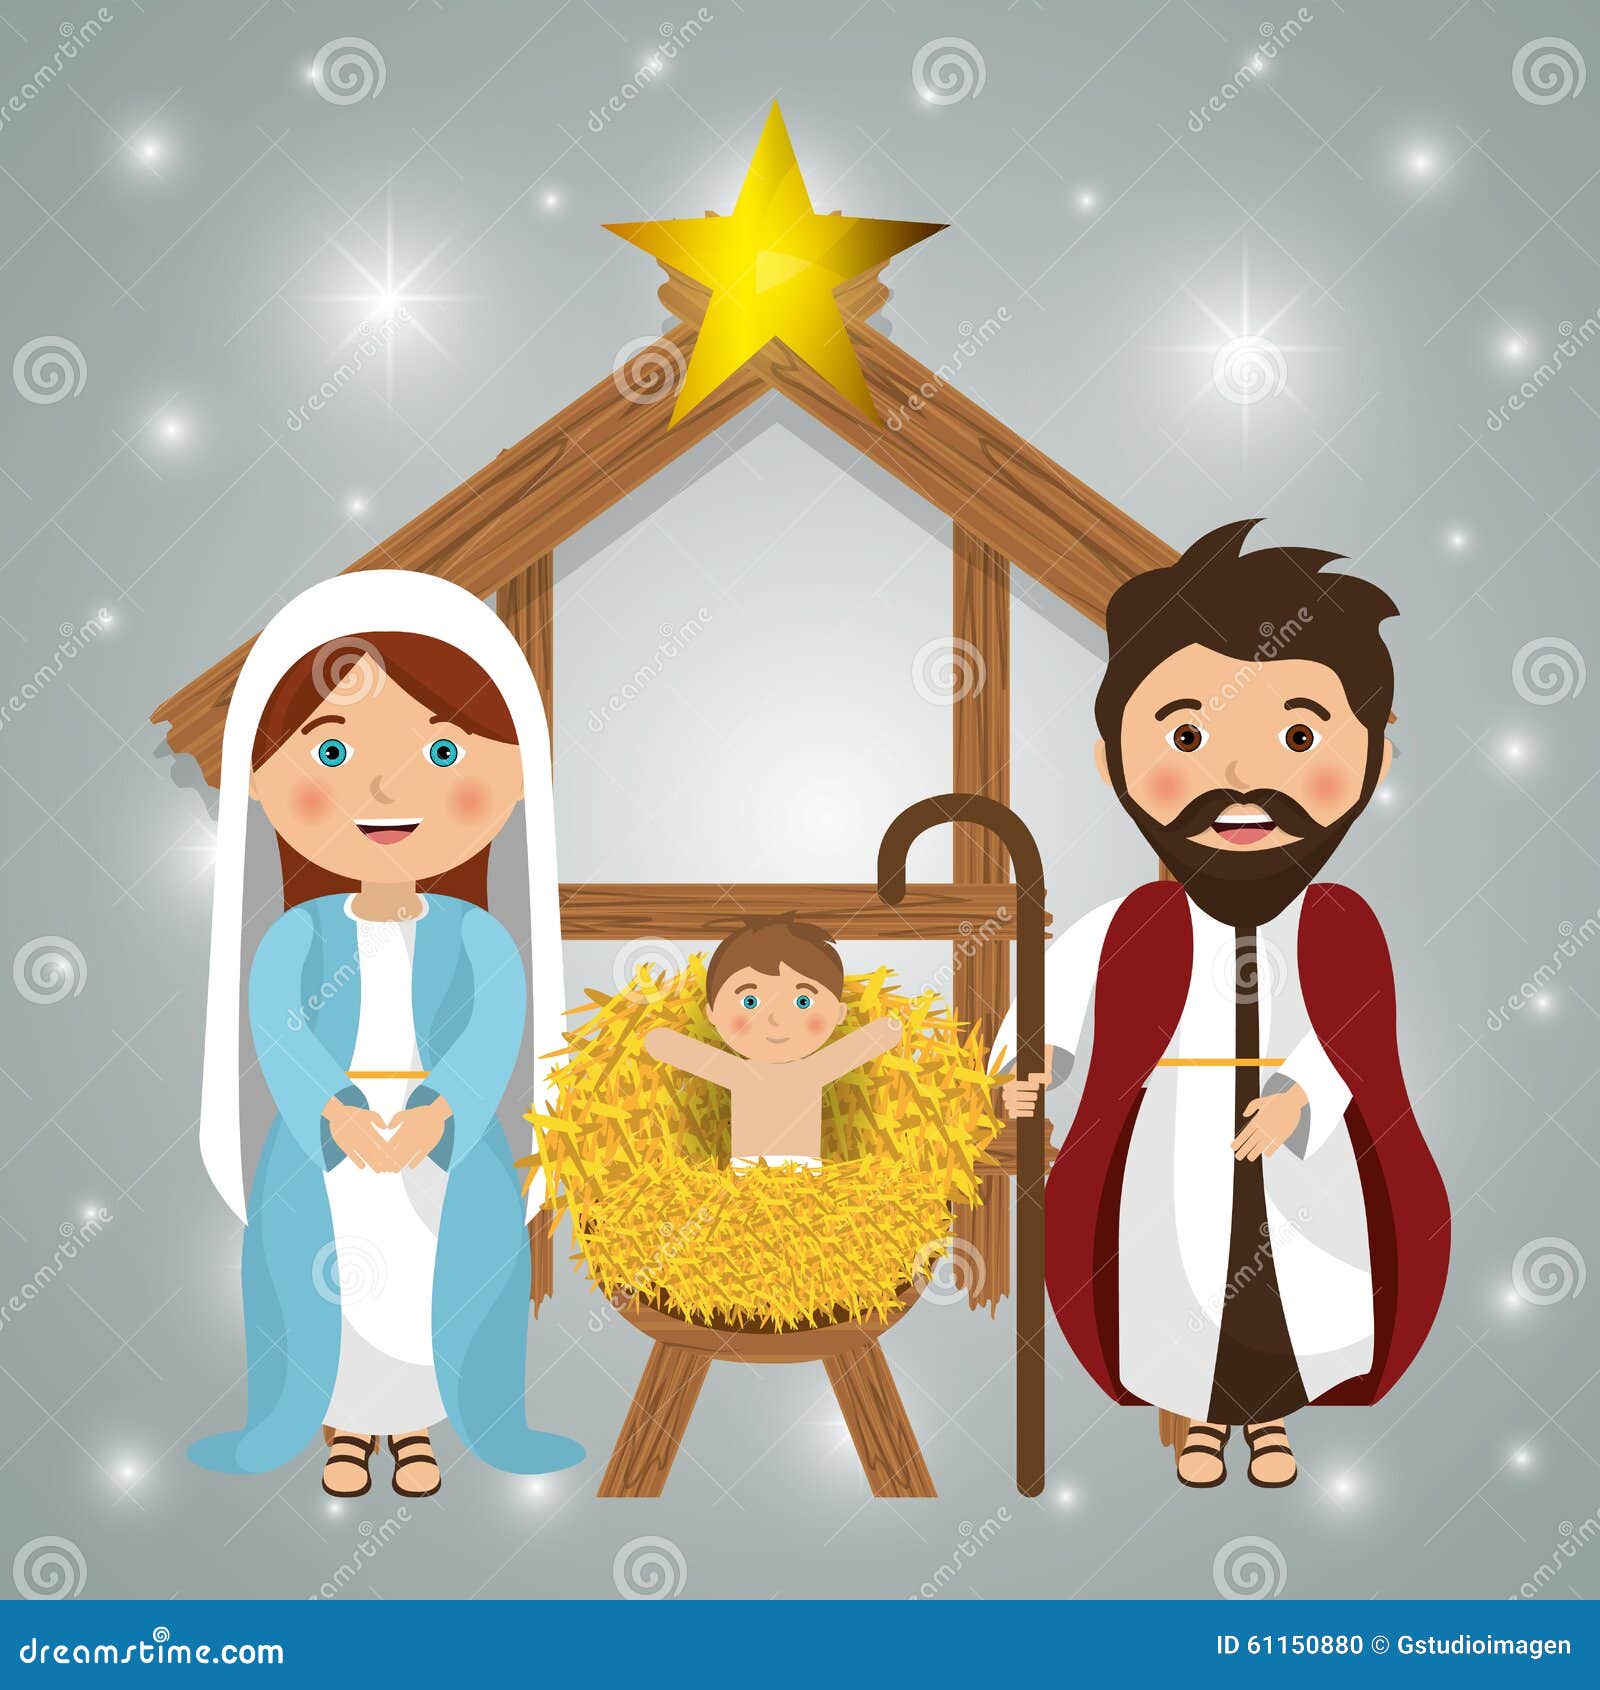 Merry christmas cartoons stock vector. Illustration of nativity - 61150880